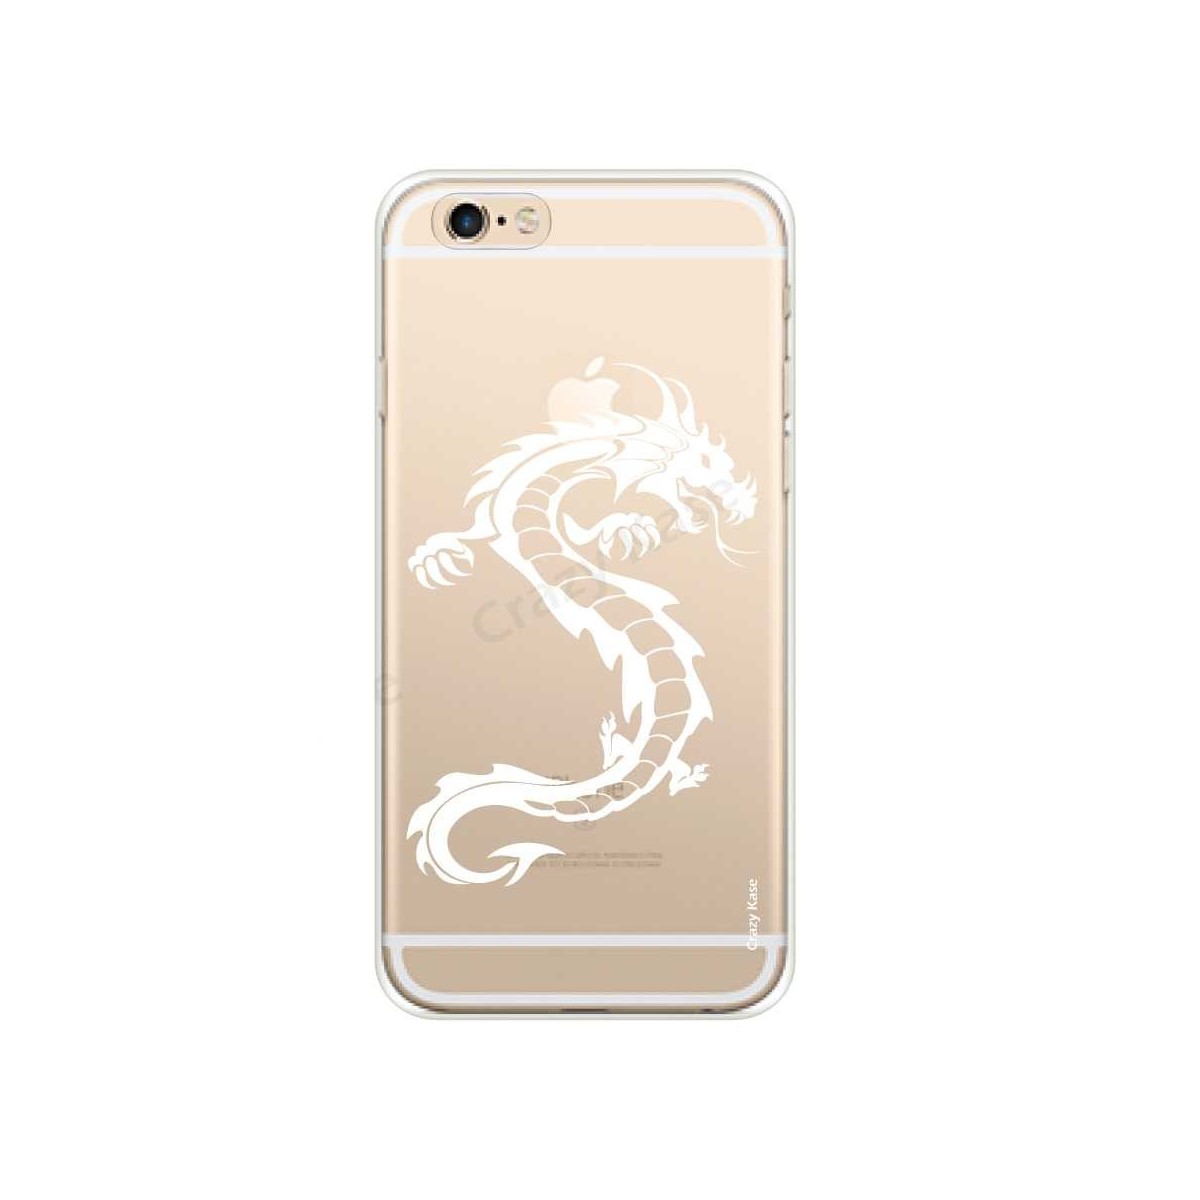 Coque iPhone 6 / 6s souple Dragon blanc - Crazy Kase